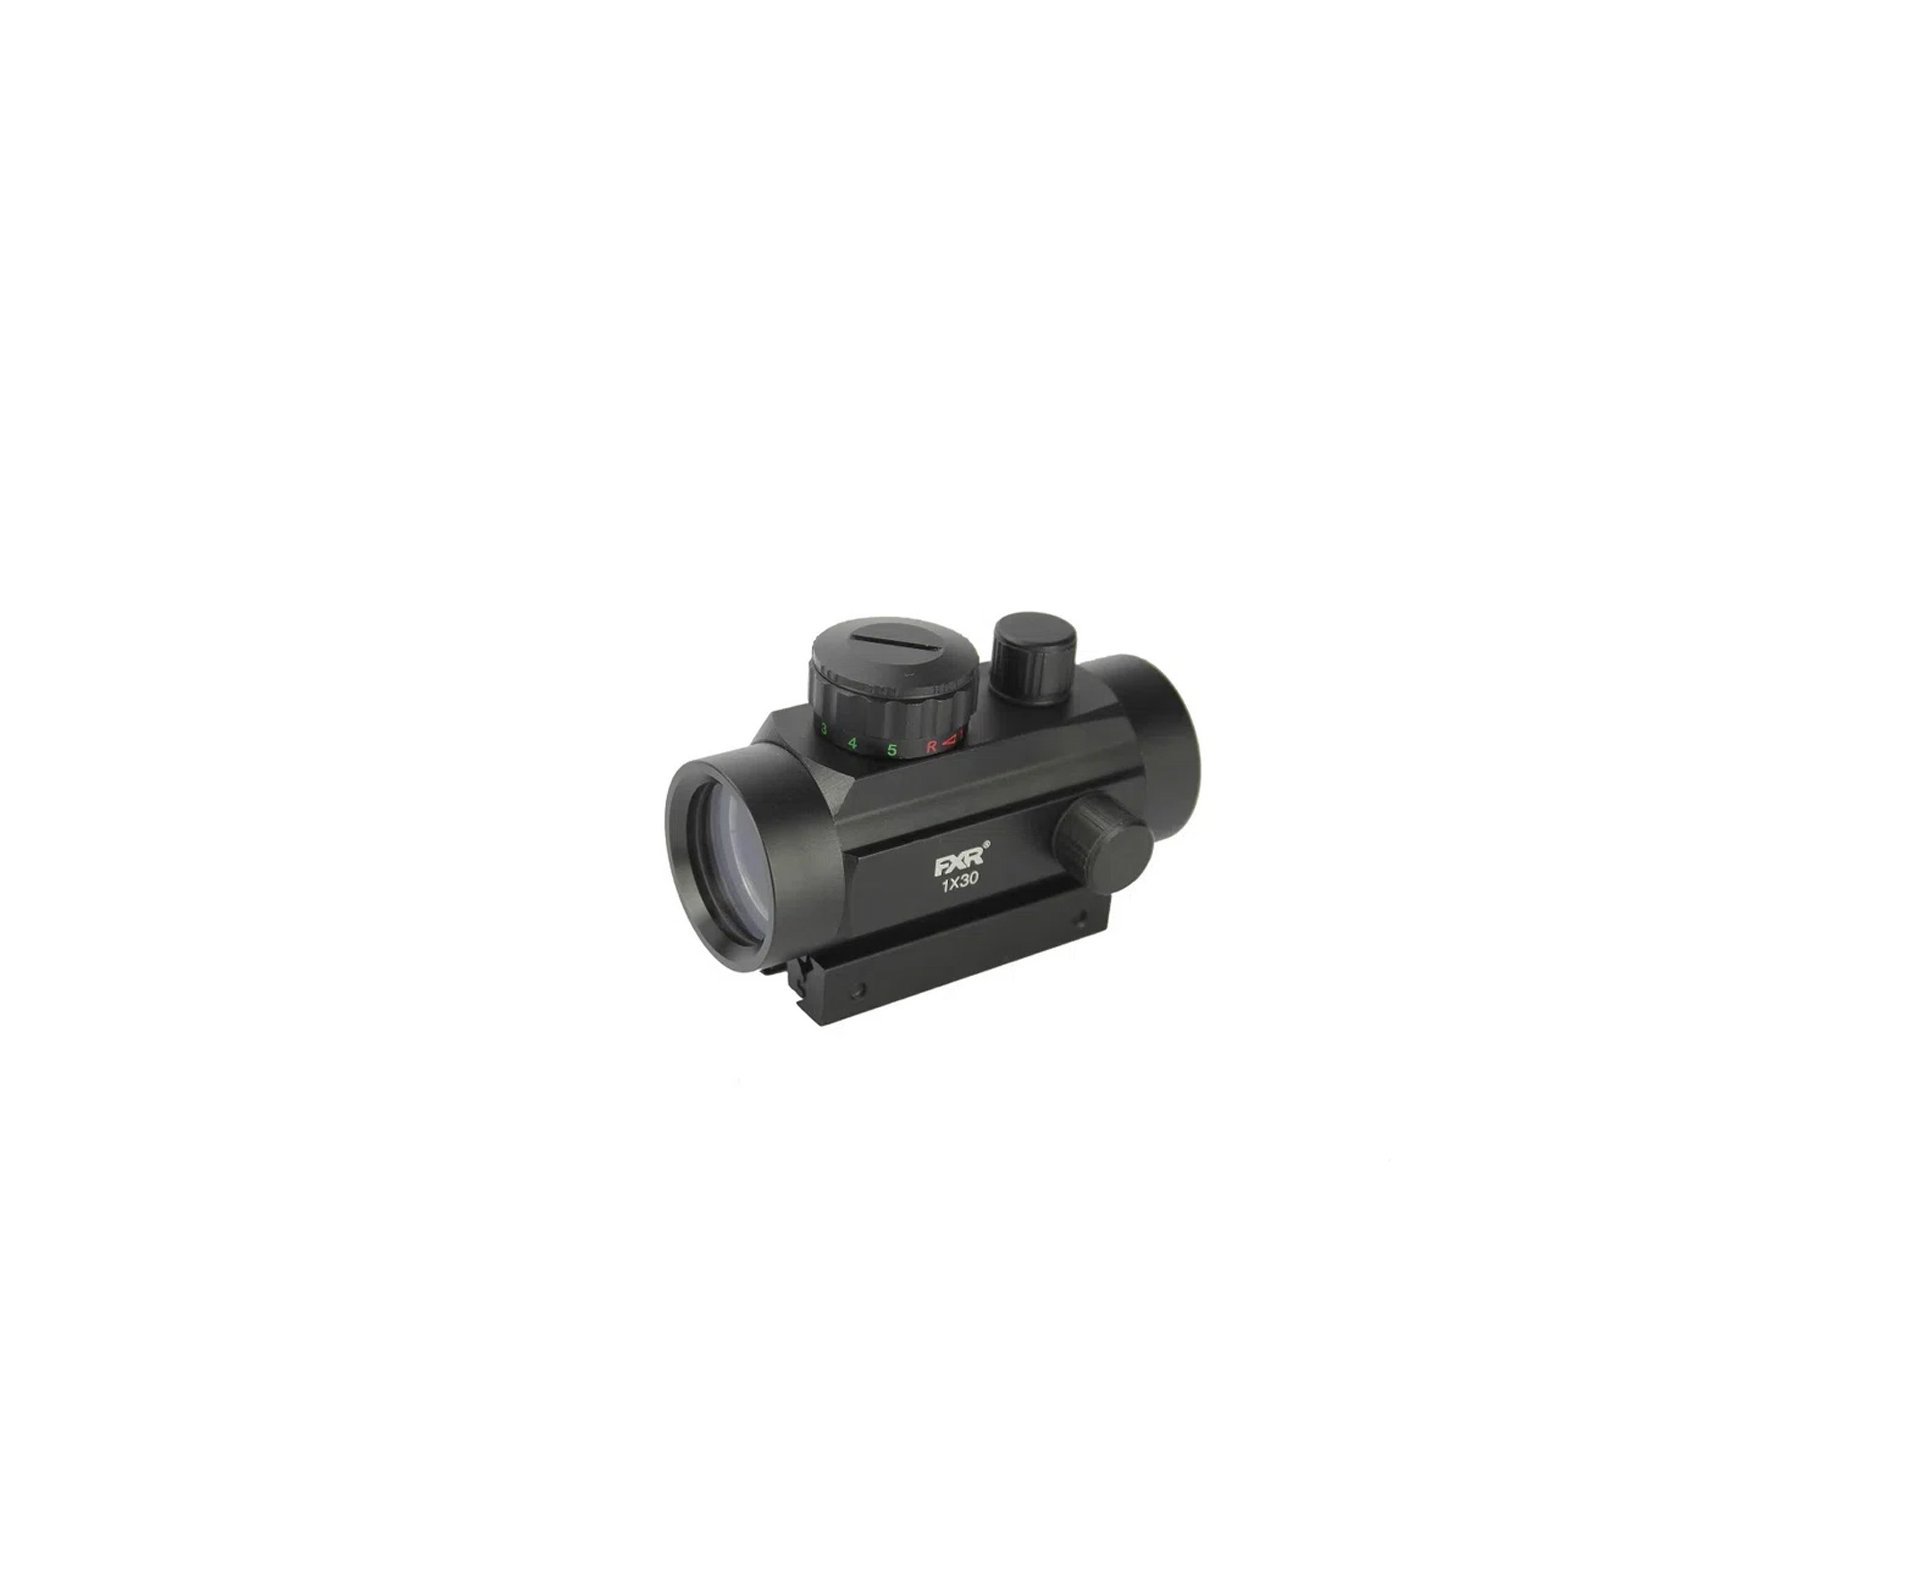 Carabina de Pressão CBC Nitro-X 1000 6.35mm Oxidada + Red Dot + Chumbo + Capa